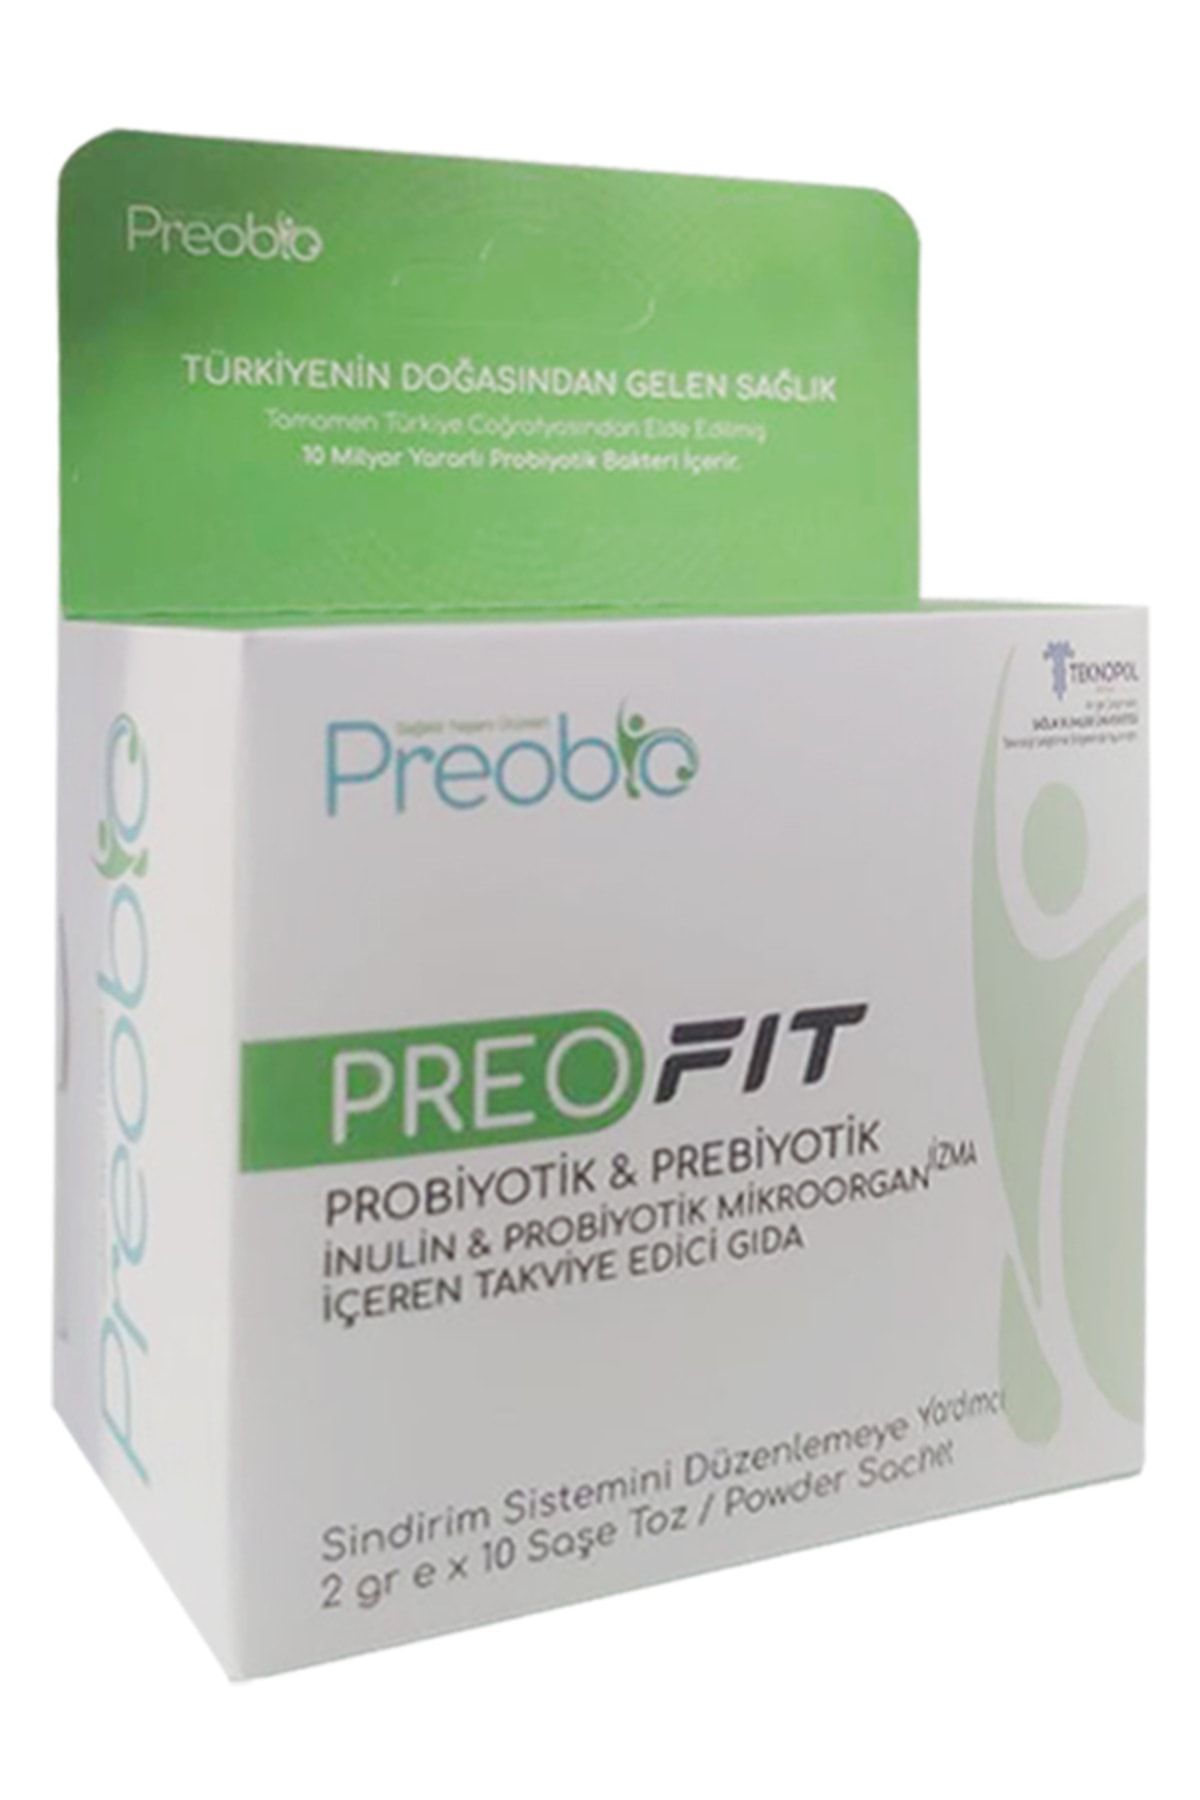 Preobio Preofit Probiyotik Prebiotik Yoğurt Mayası 1 Kutu 20 Saşe